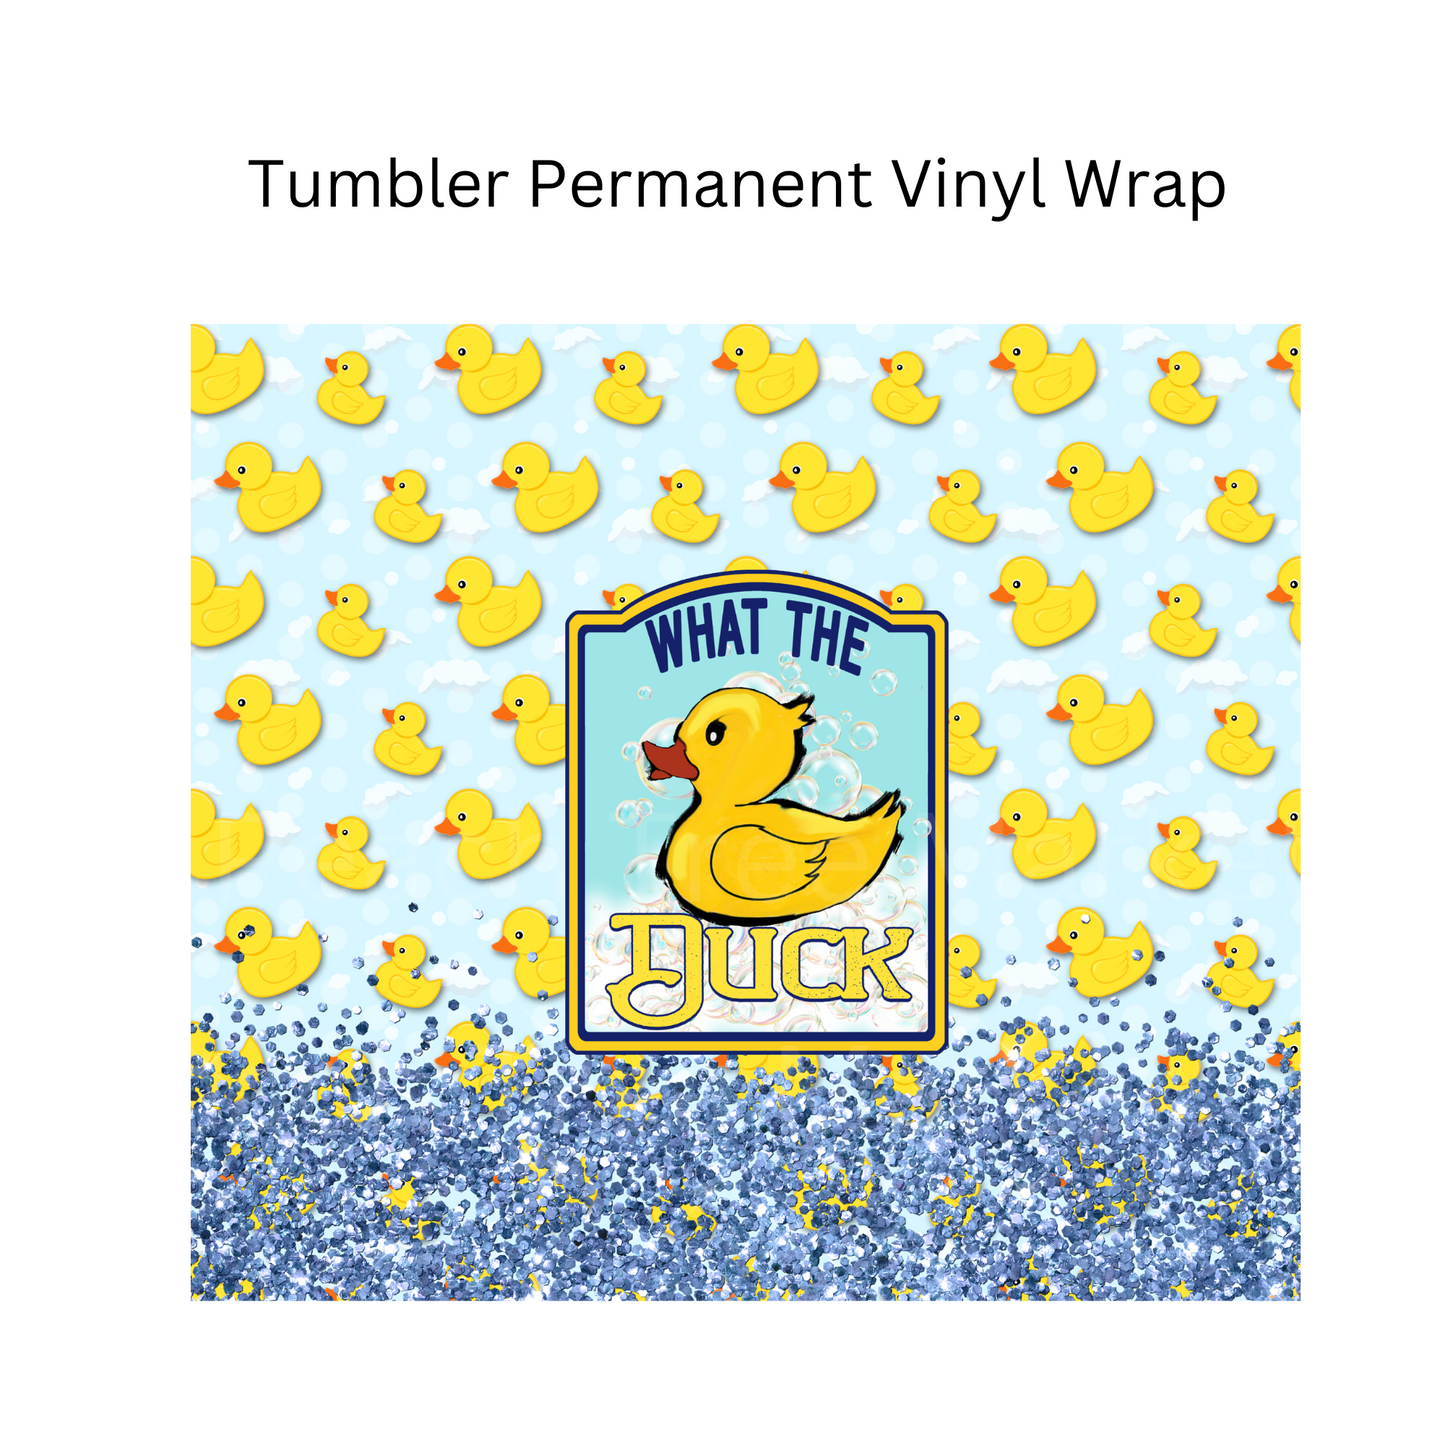 What The Duck Permanent Vinyl Wrap